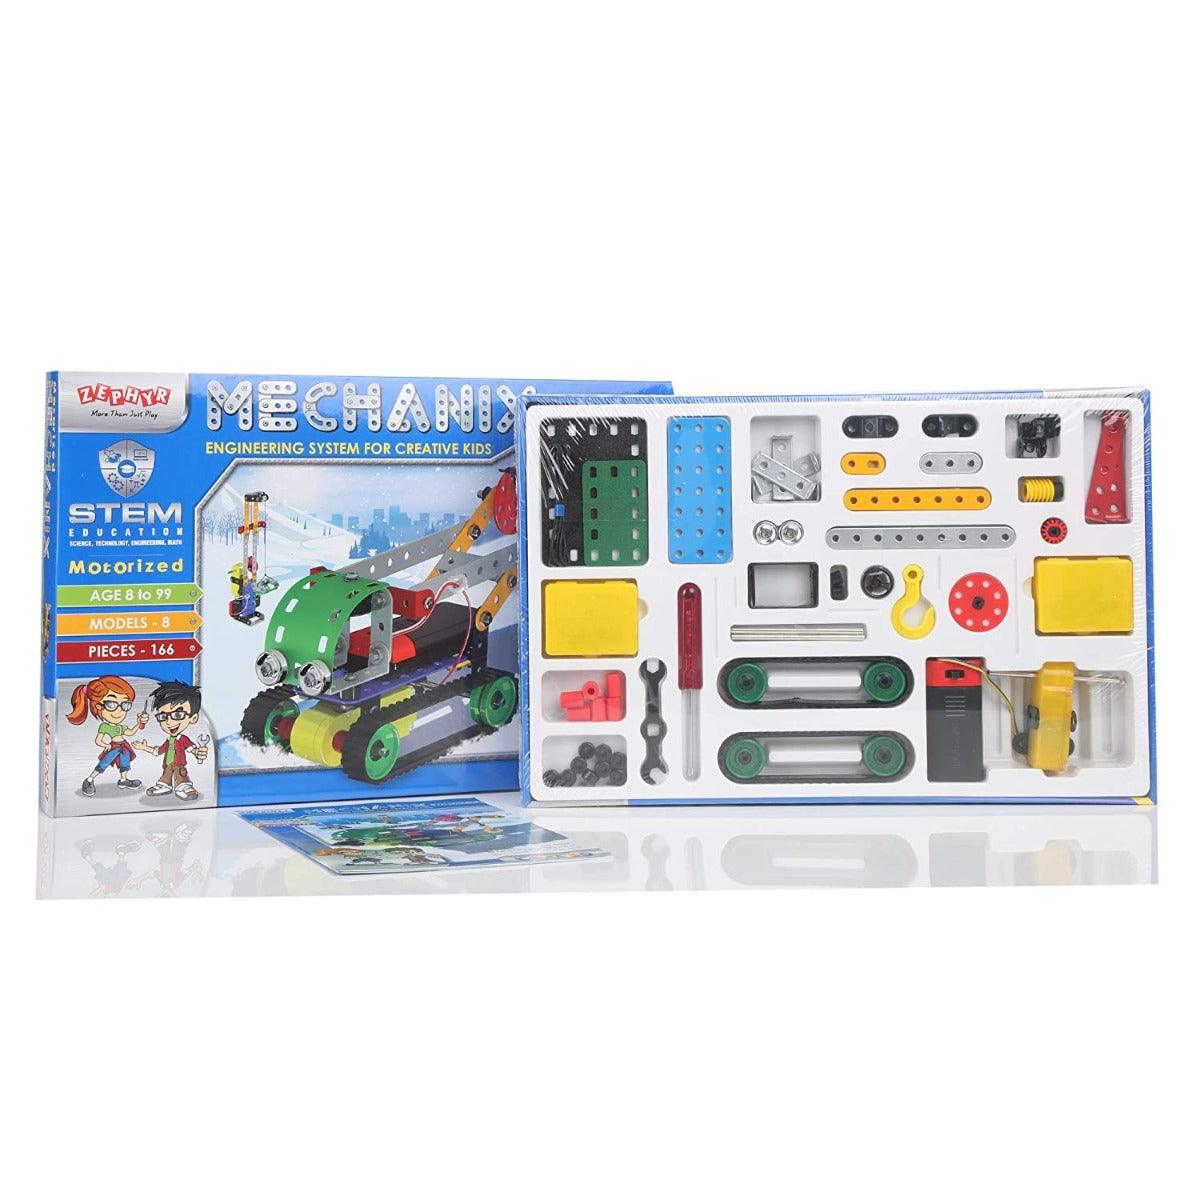 Zephyr Mechanix - Robotix 2 Motorized DIY Mechanical STEM Toy for Ages 8-99 Years